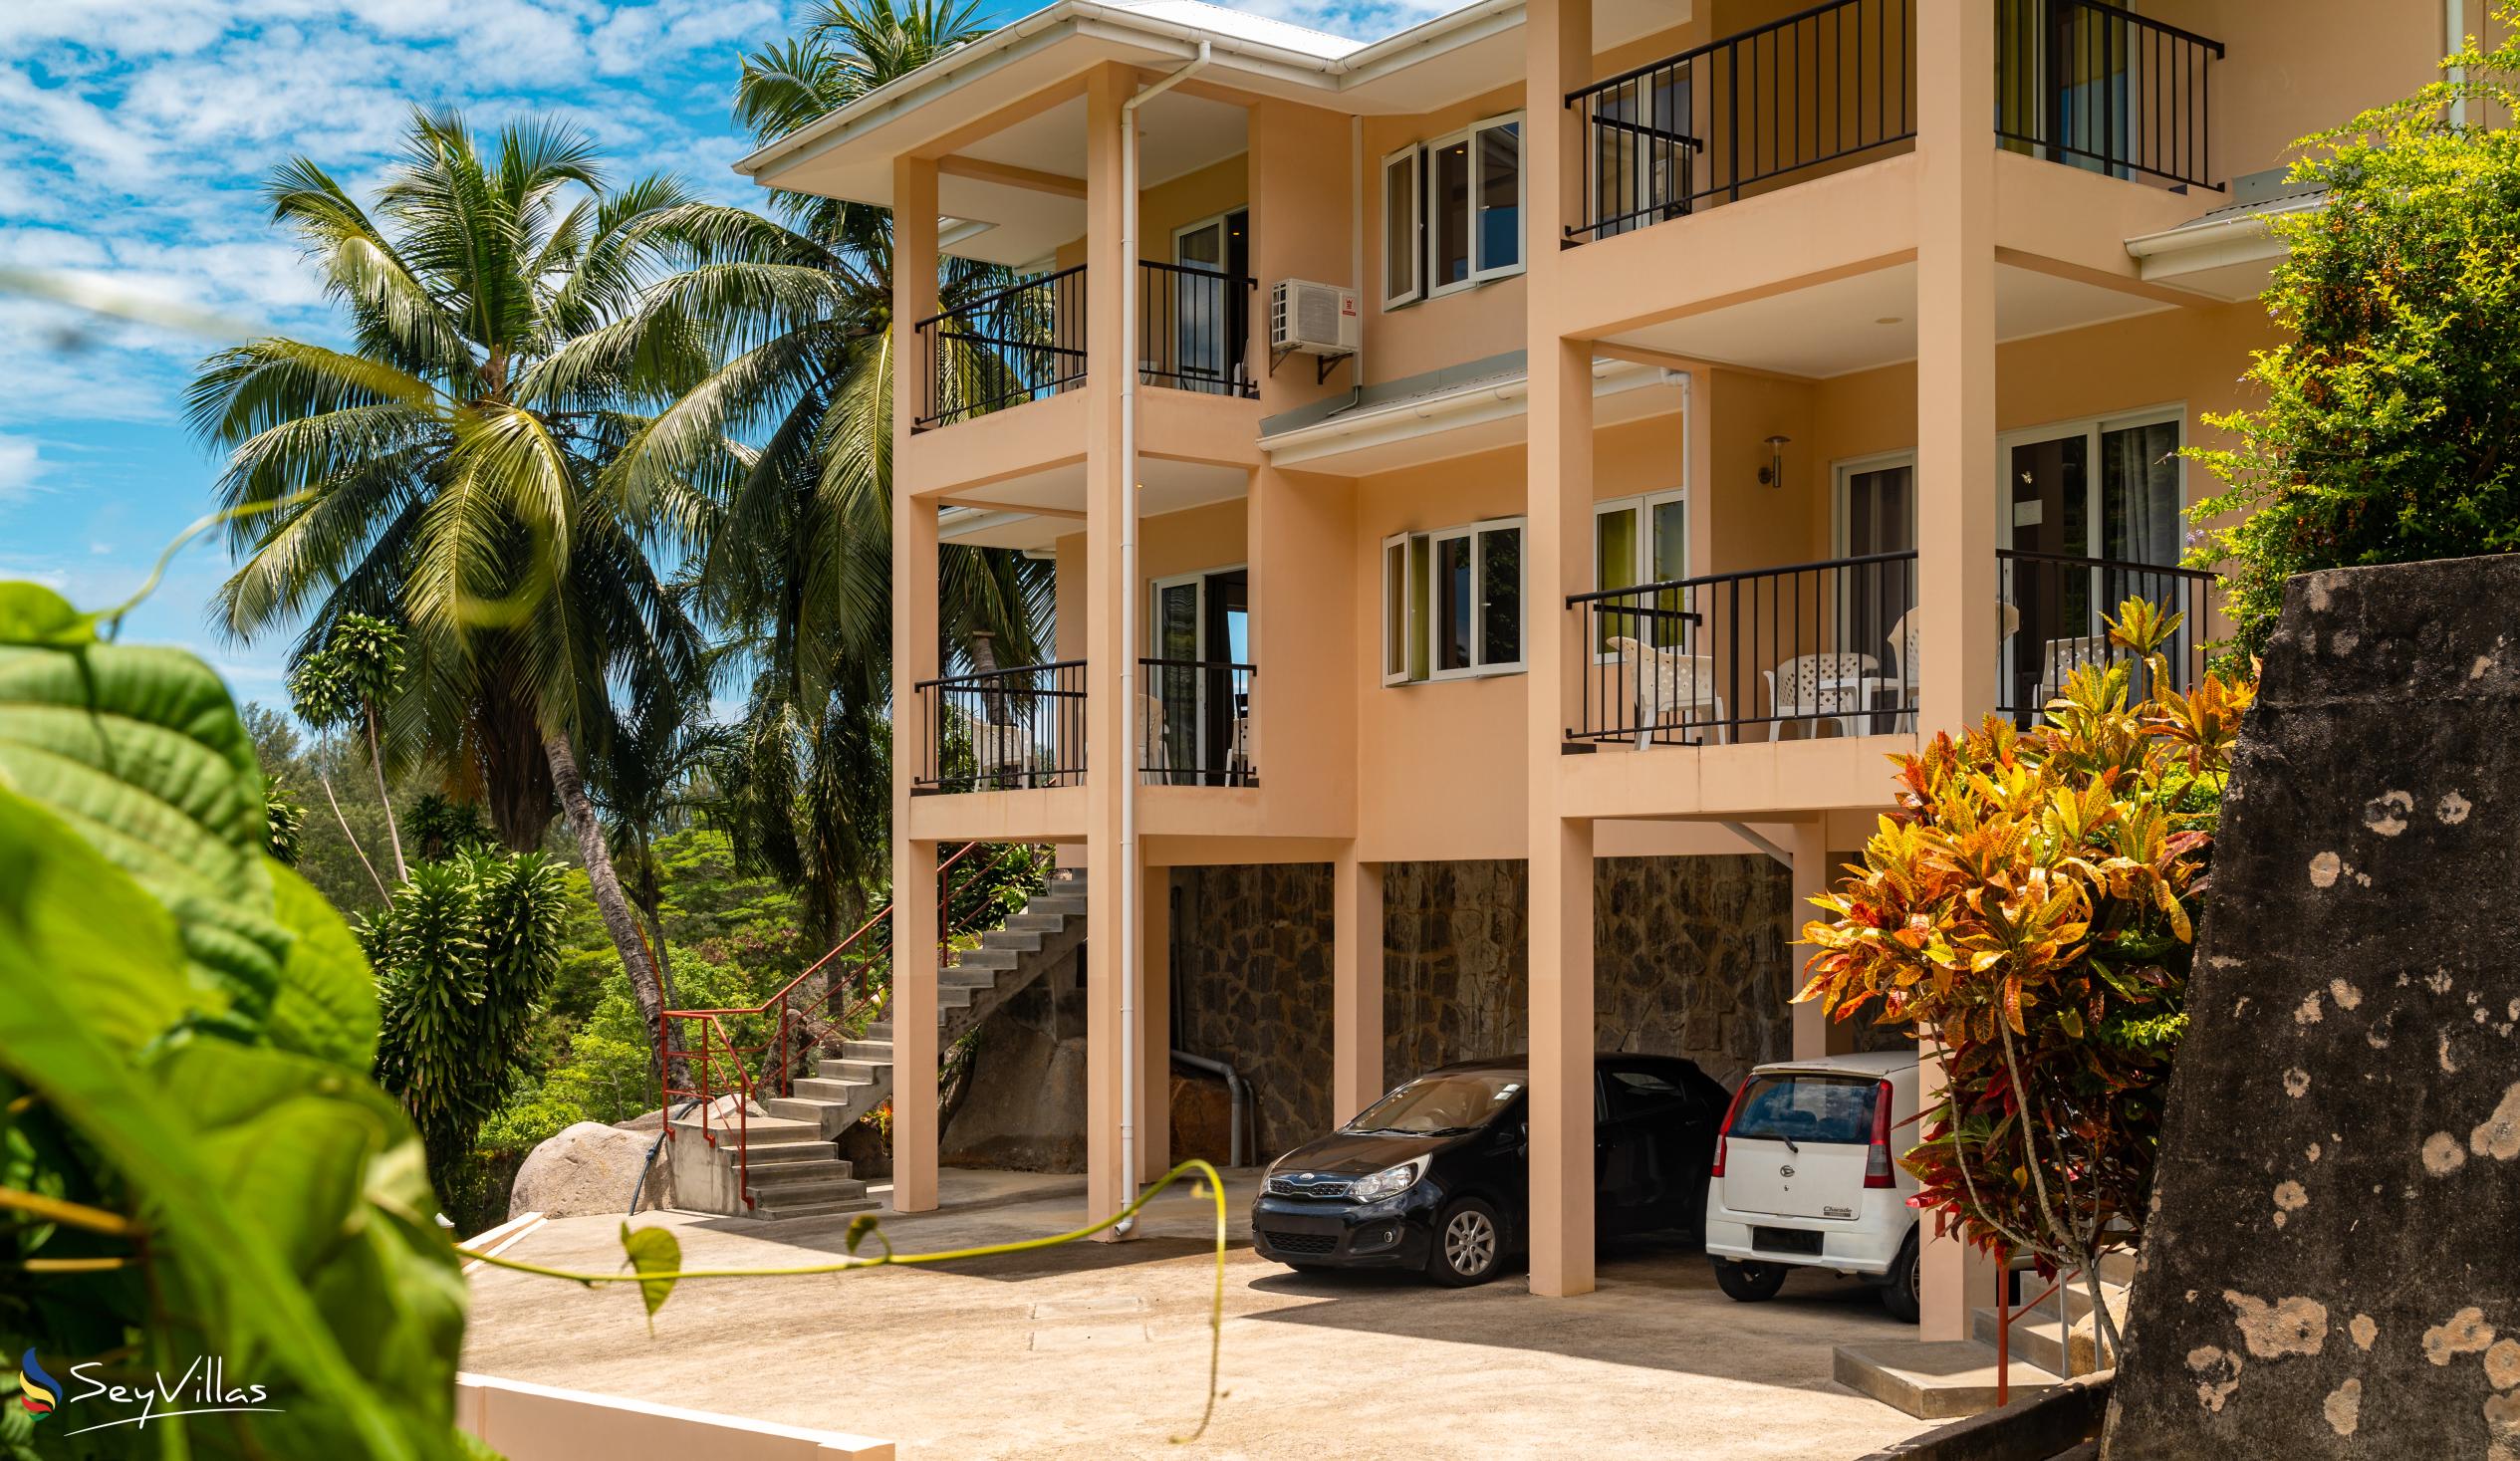 Photo 5: JAIDSS Holiday Apartments - Outdoor area - Mahé (Seychelles)